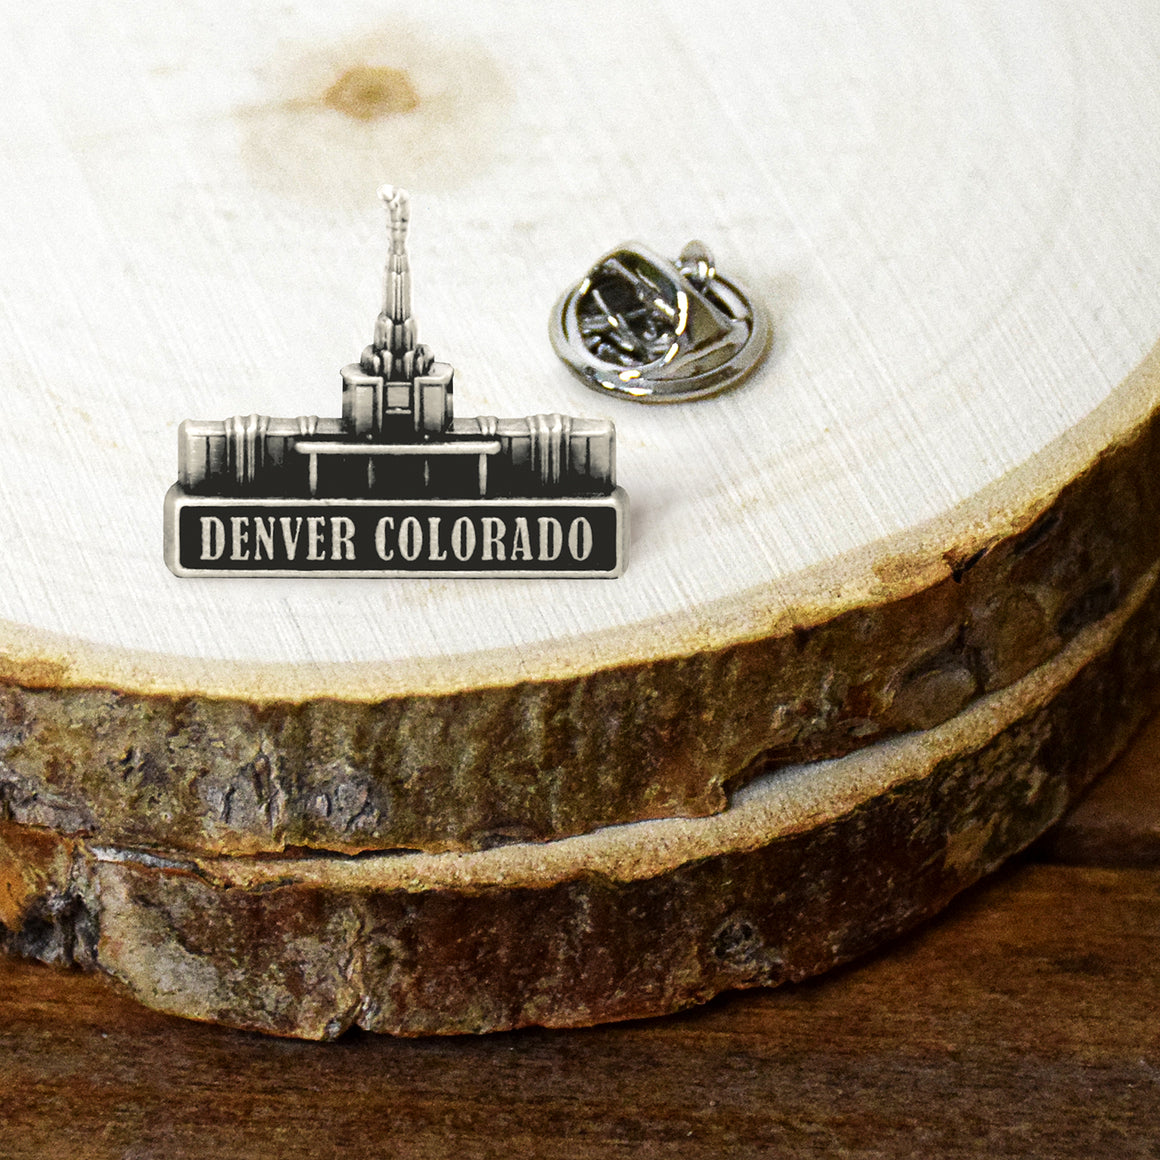 Denver Colorado Temple Pin